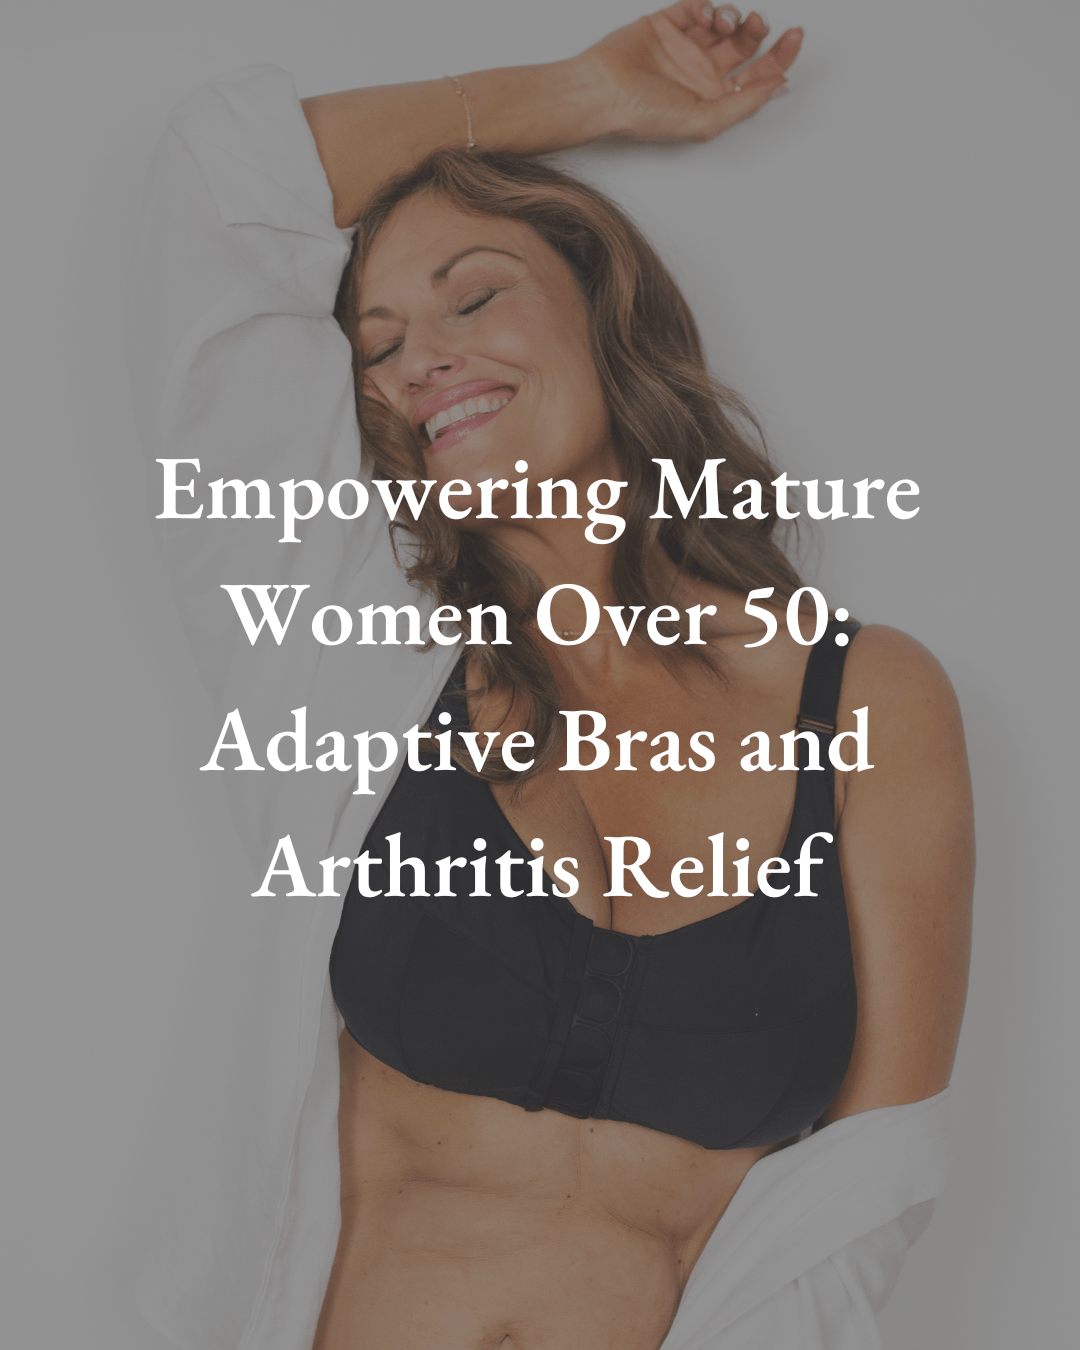 Empowering Mature Women Over 50: Adaptive Bras and Arthritis